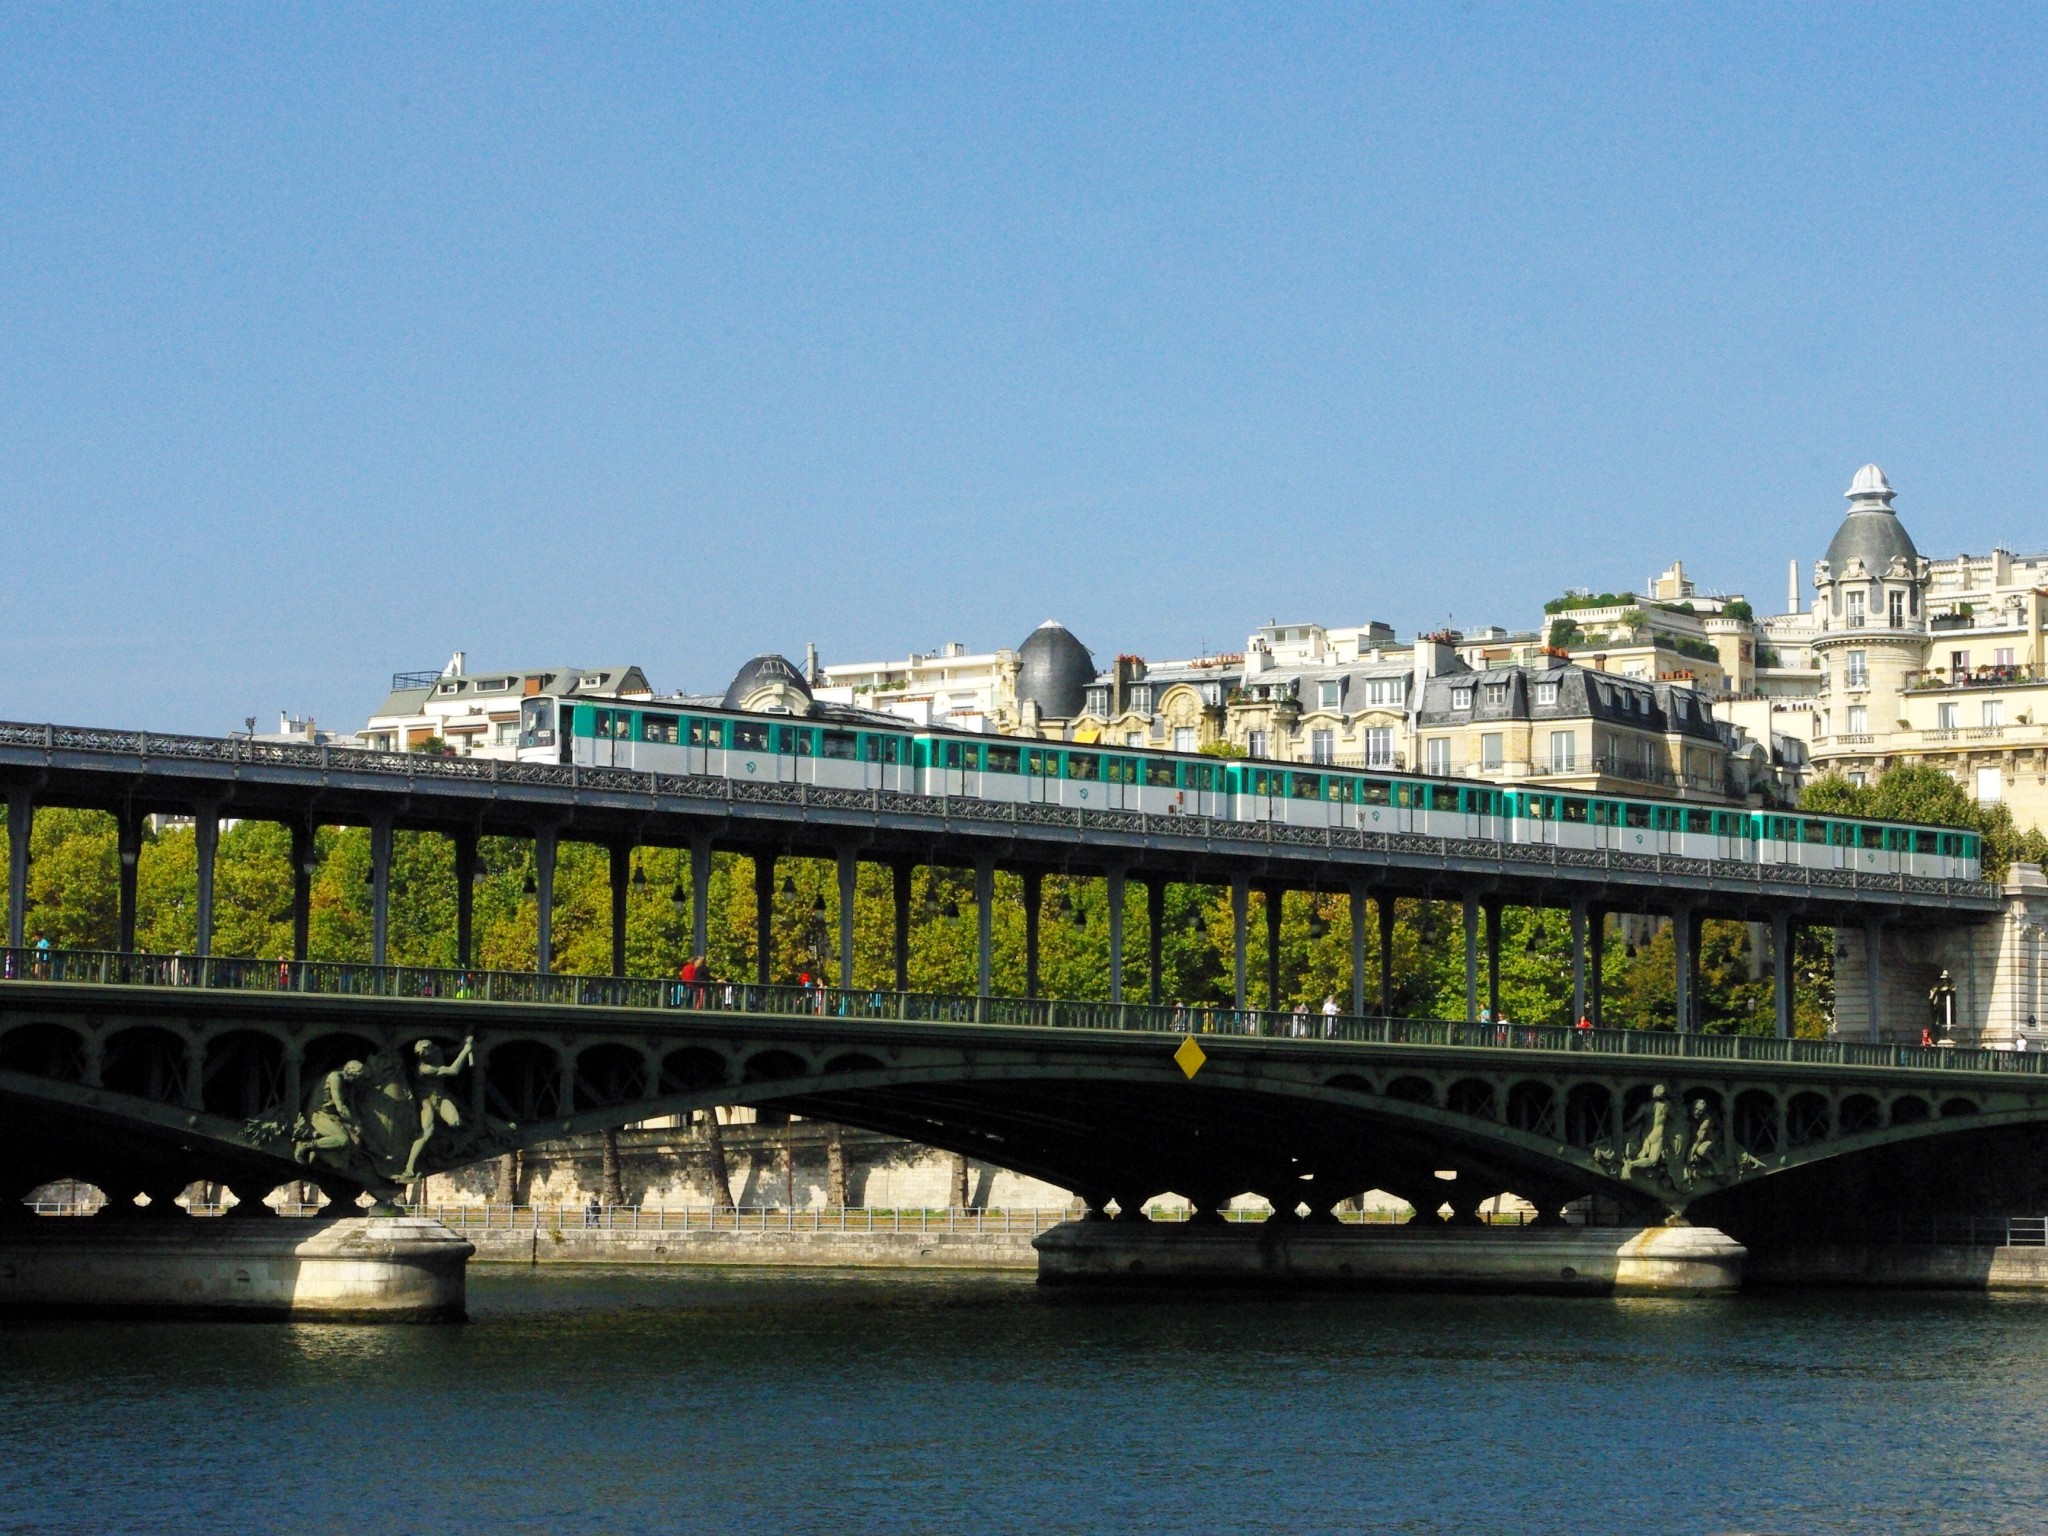 Line 6 of the Paris métro © French Moments